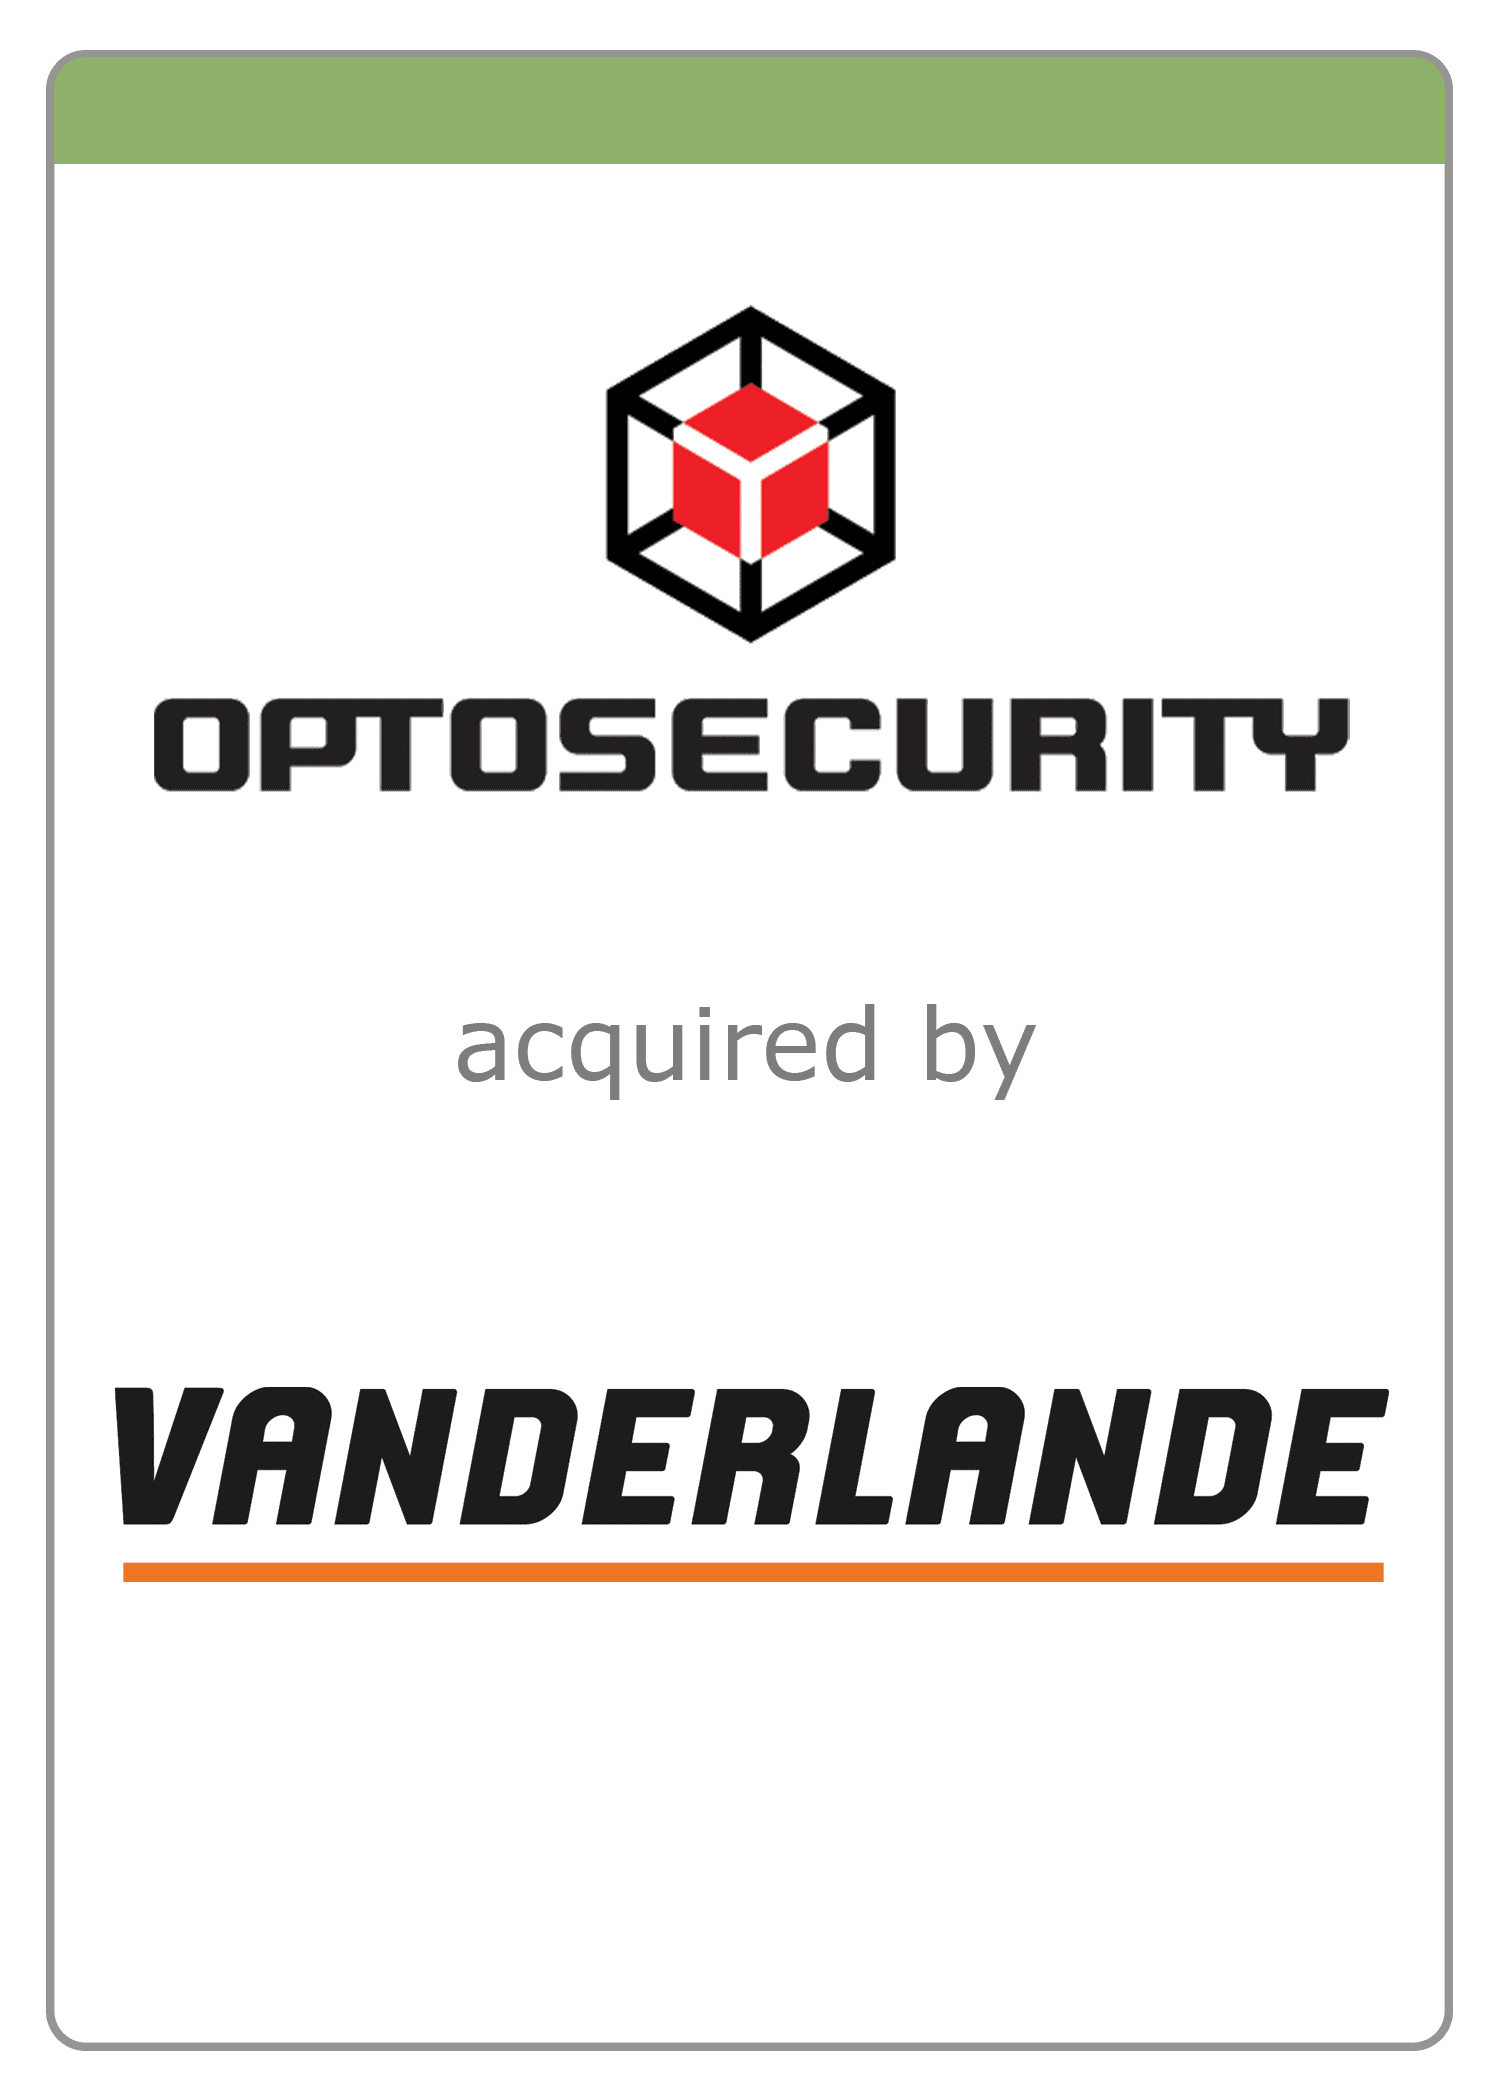 Optosecurity acquired by Vanderlande